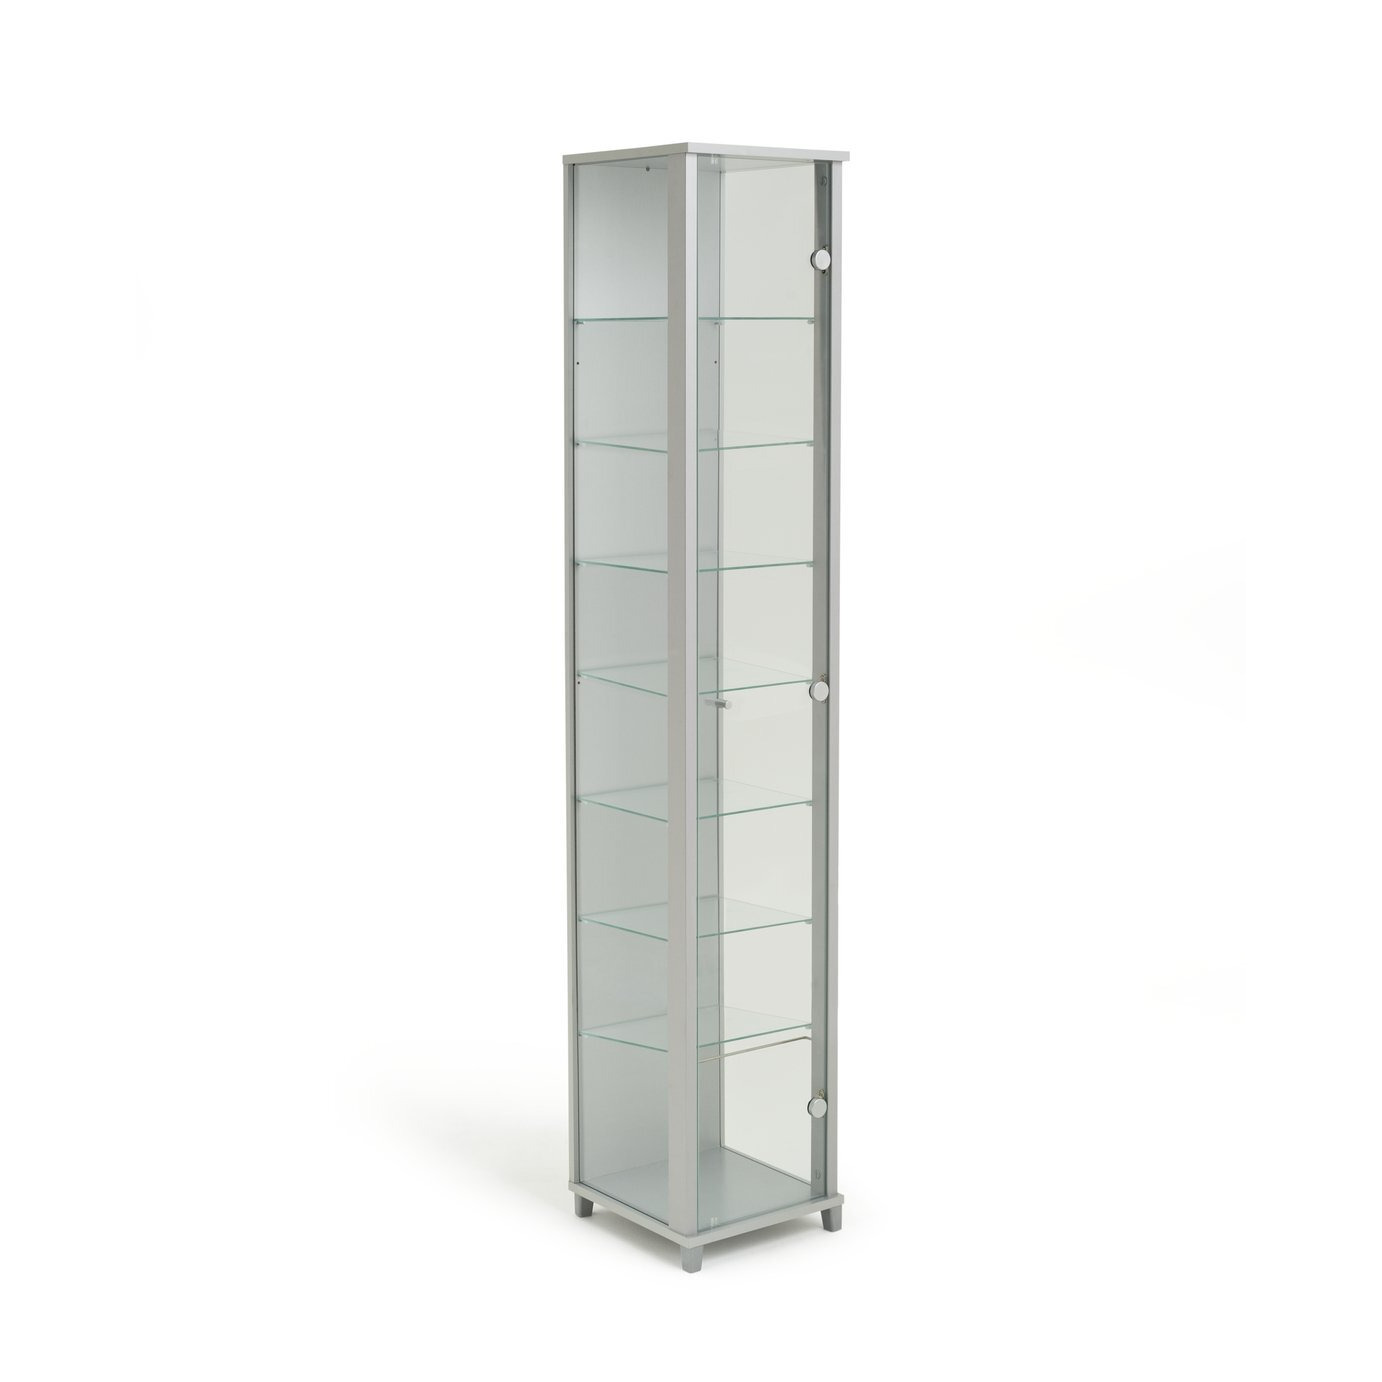 Argos Home 7 Shelf Glass Narrow Display Cabinet - Silver - image 1